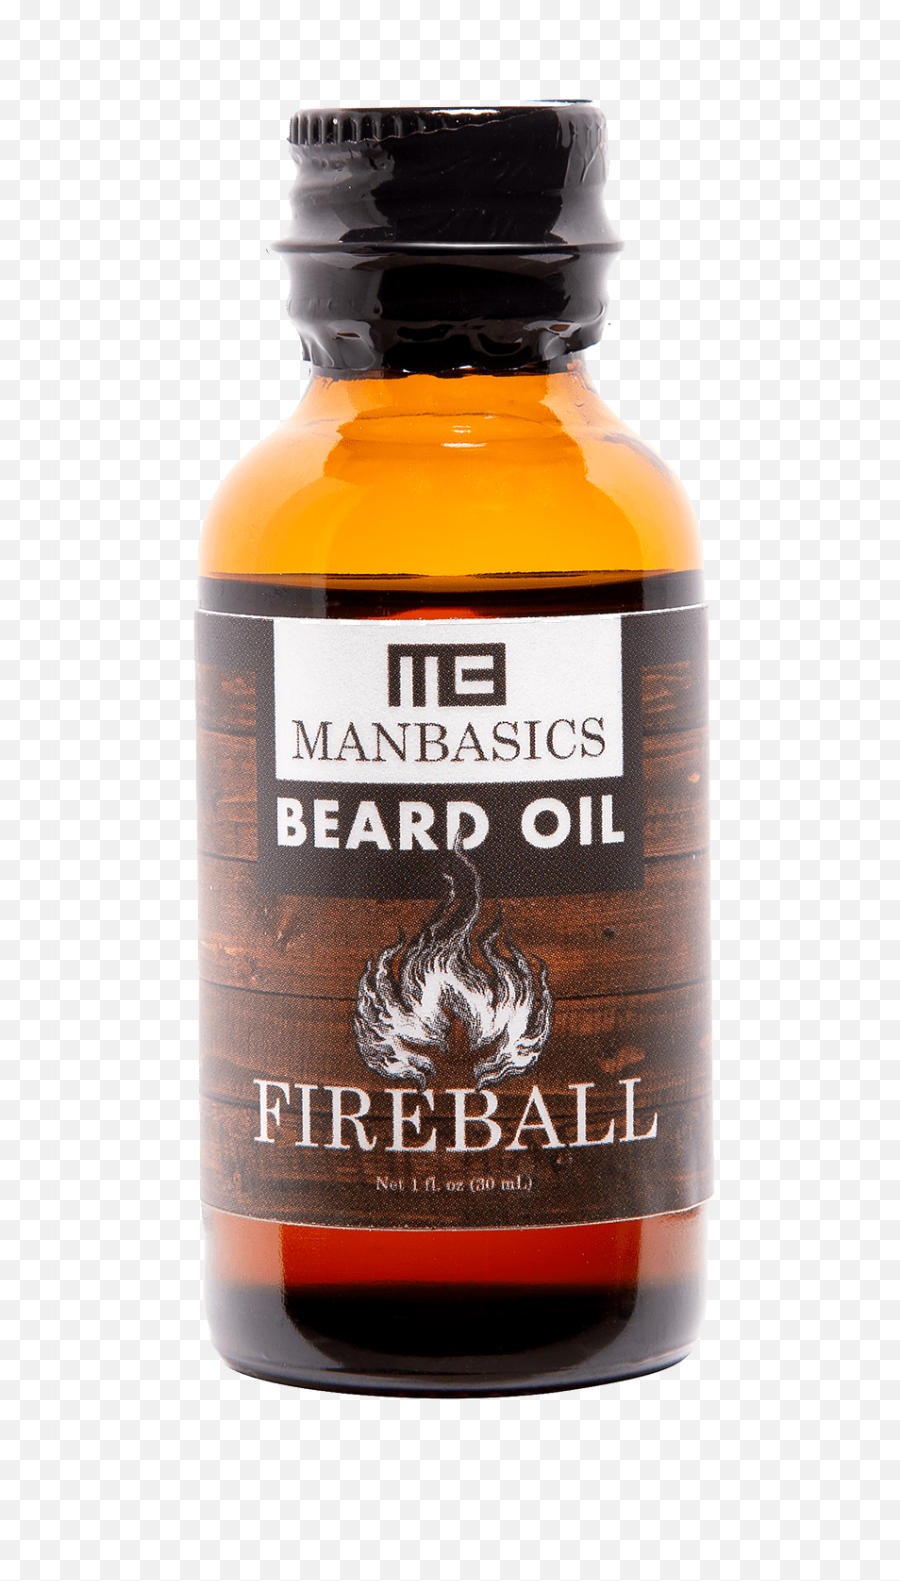 Fireball All Natural Beard Oil Png Transparent